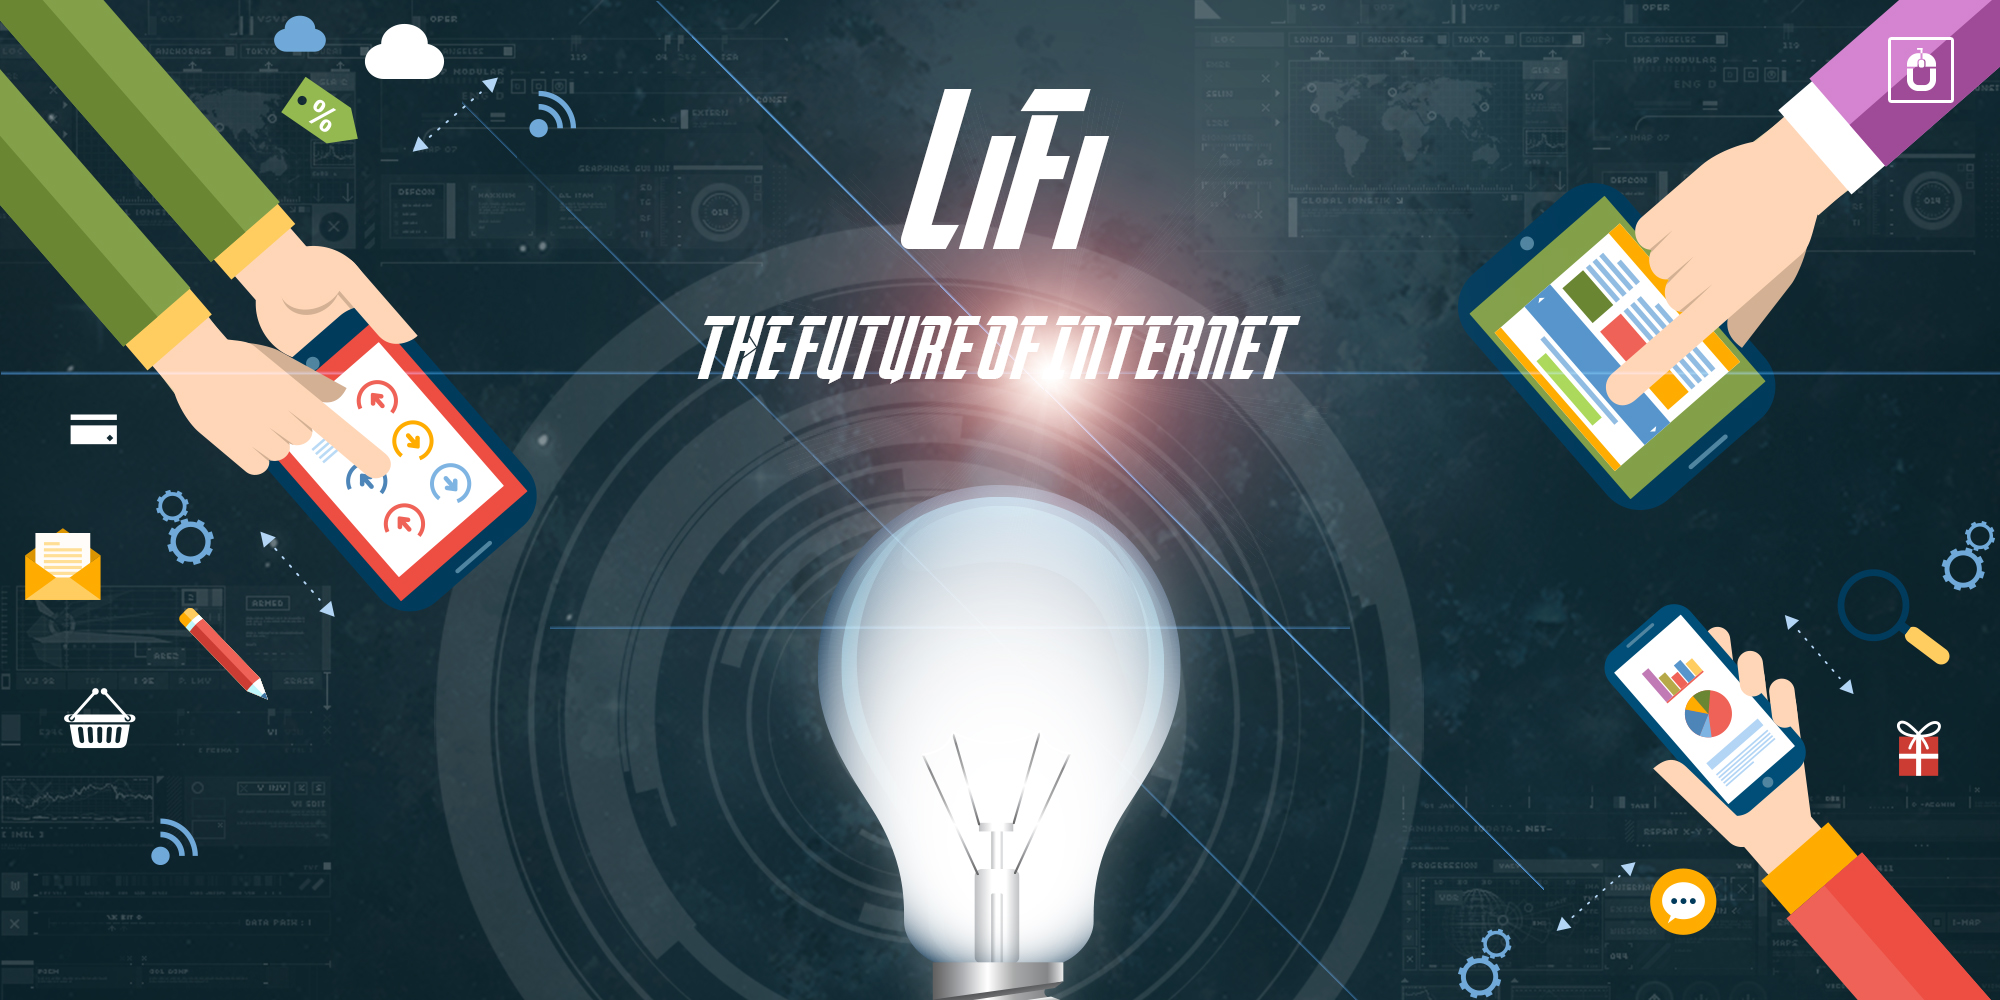 Li-Fi – THE FUTURE OF INTERNET